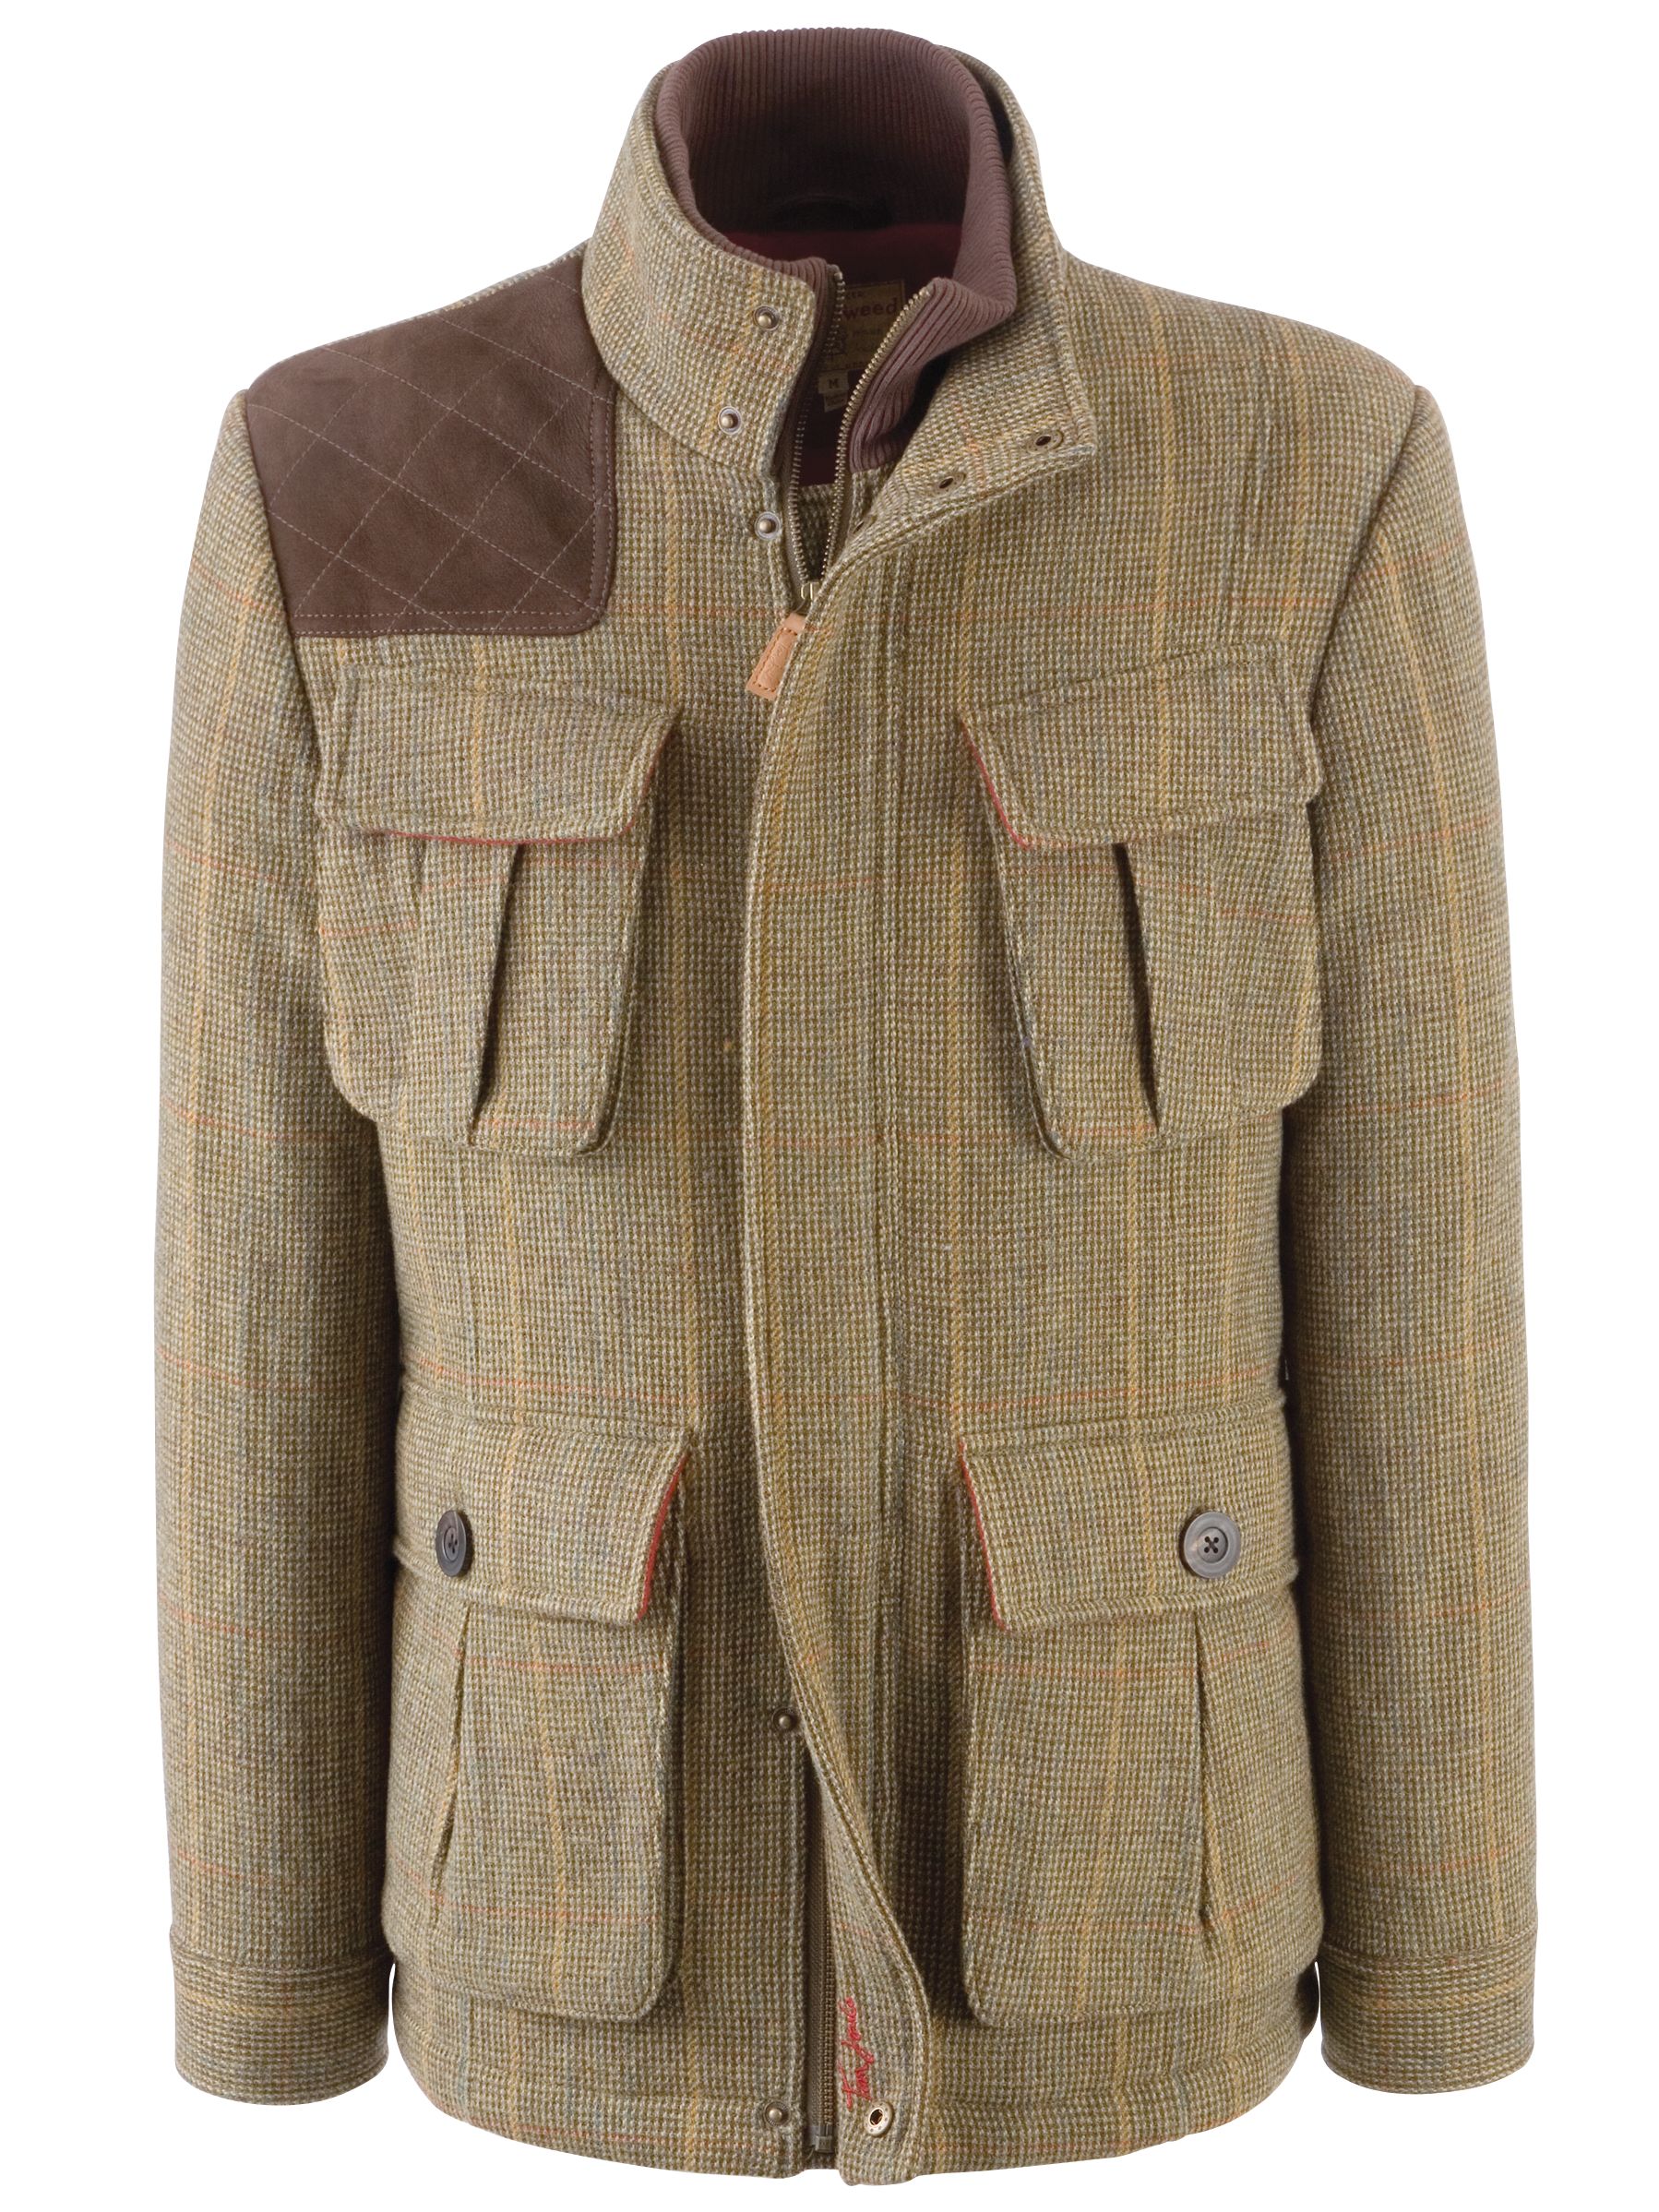 Joules Hamilton Tweed Coat, Toad Green at John Lewis